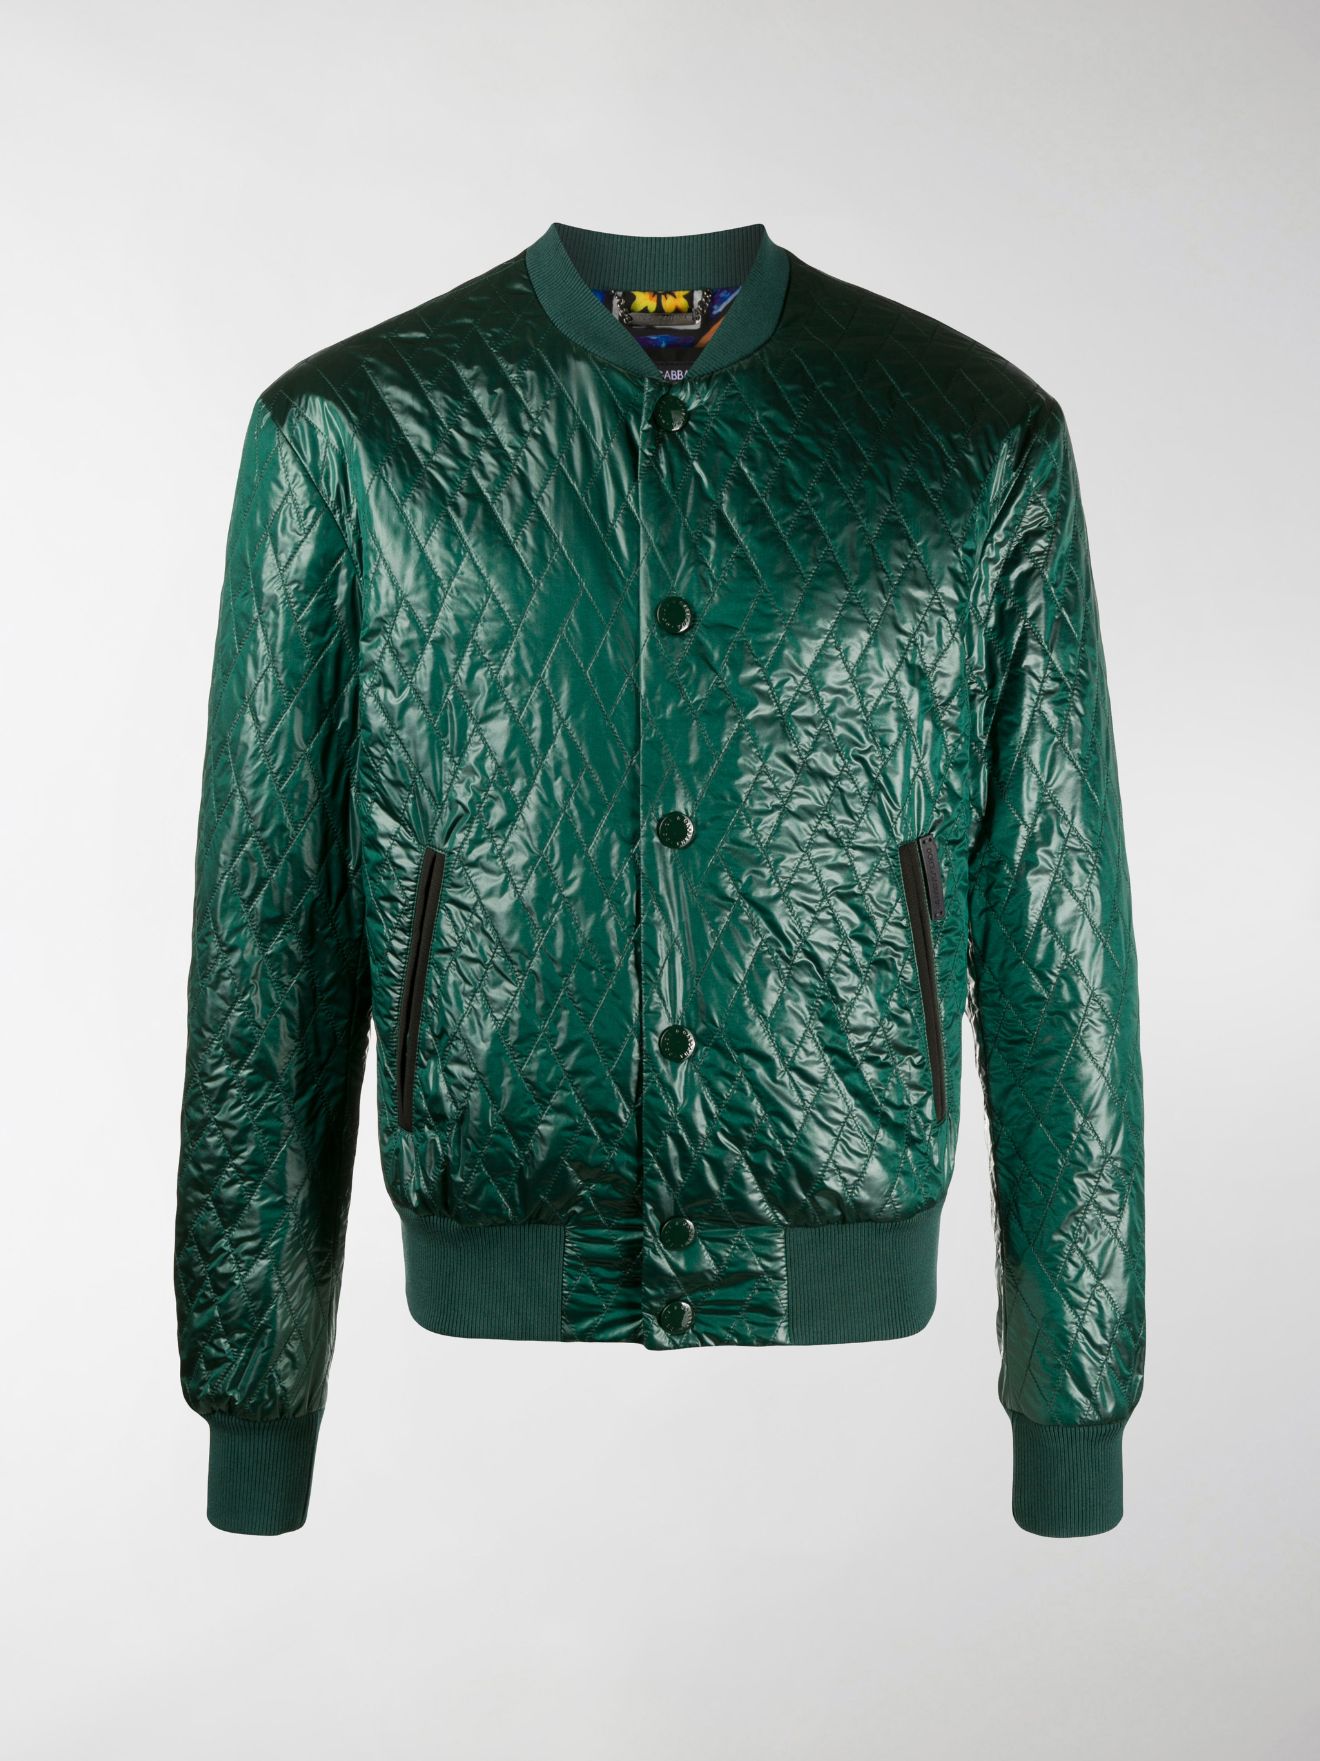 dolce and gabbana green jacket